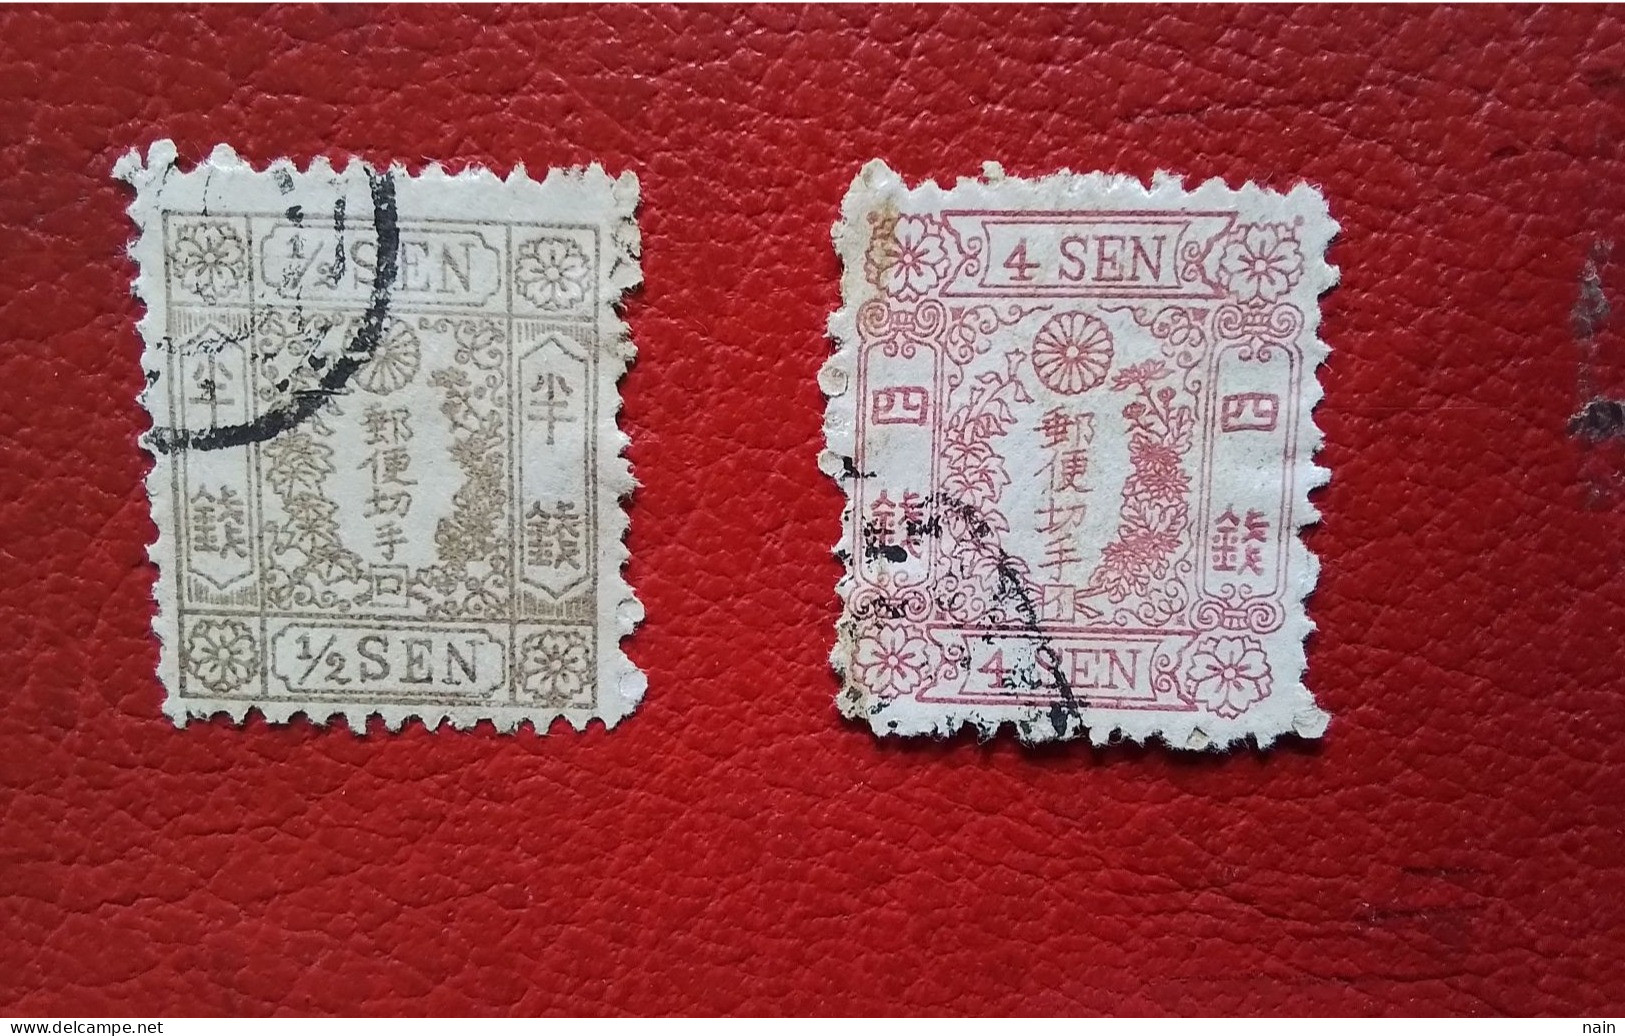 JAPON - 2 TIMBRES : 1/2 SEN - 4 SEN -  VOIR LES SCANS ... - Used Stamps